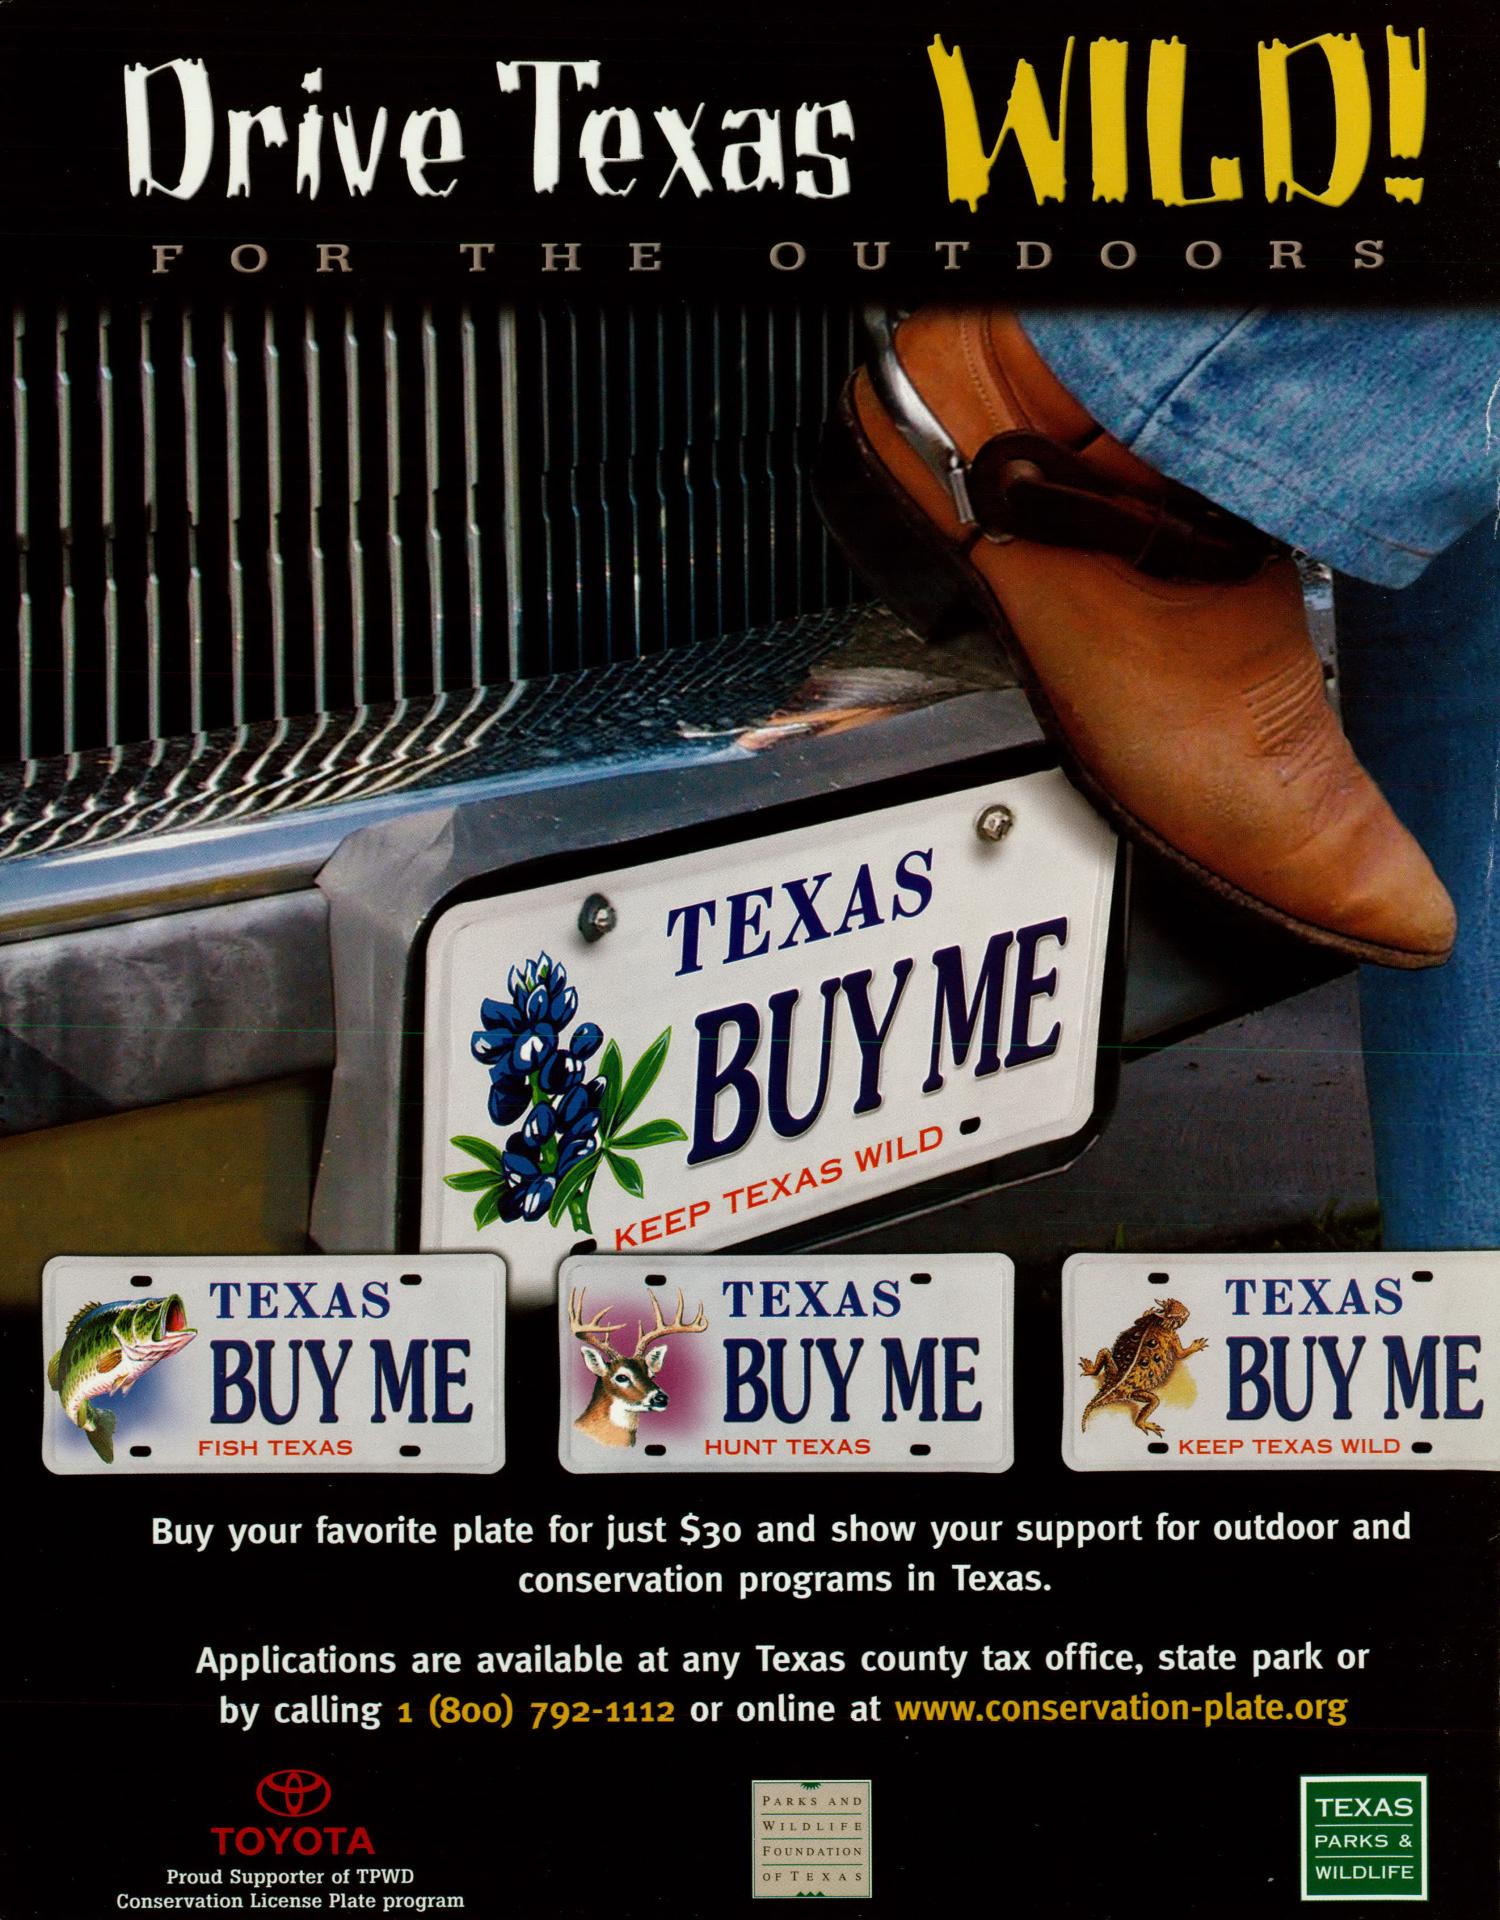 Texas Highways, Volume 51 Number 4, April 2004
                                                
                                                    Inside Front Cover
                                                